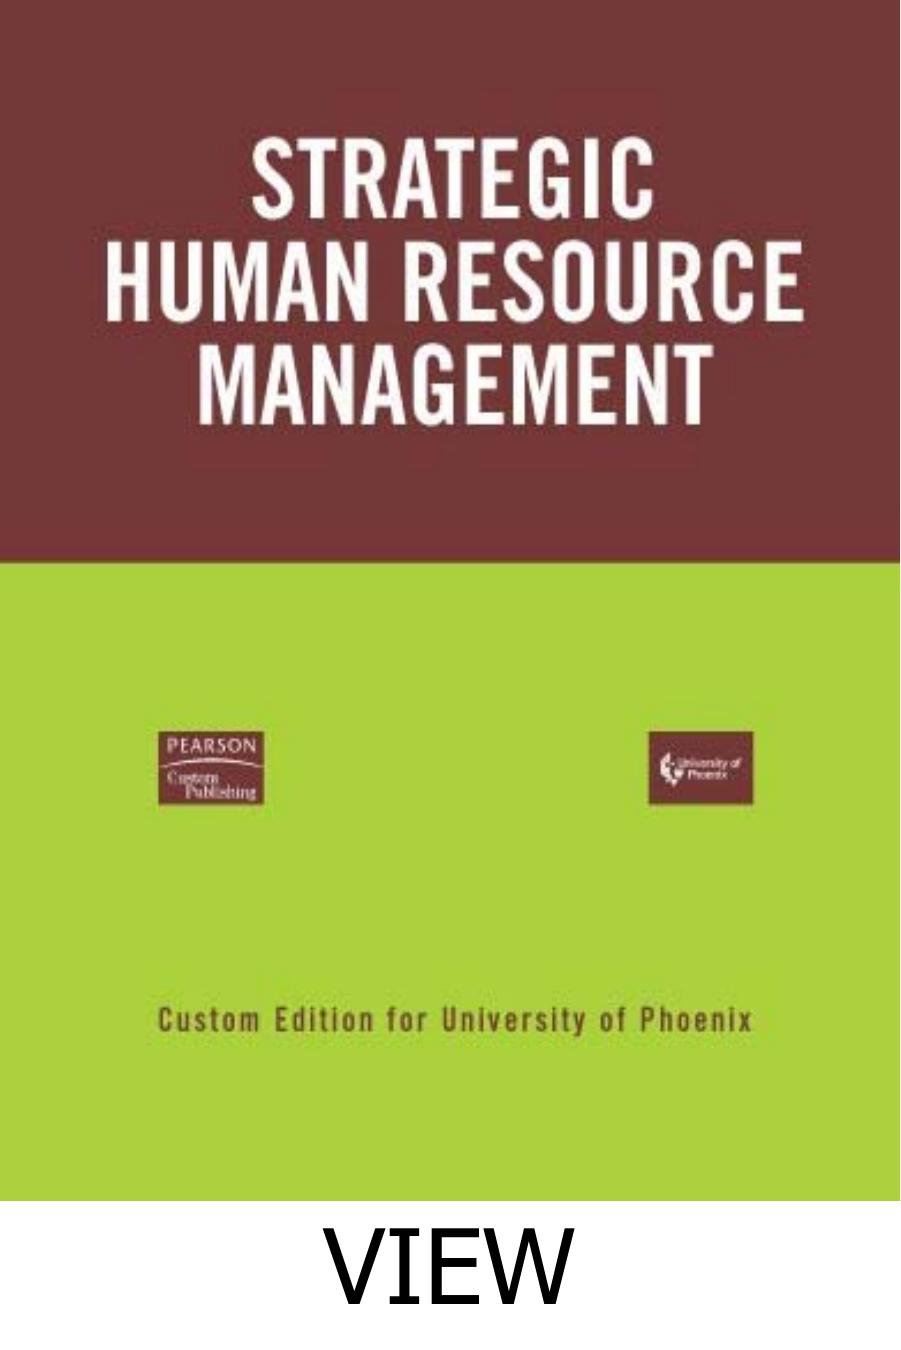 Strategic Human Resource Management view